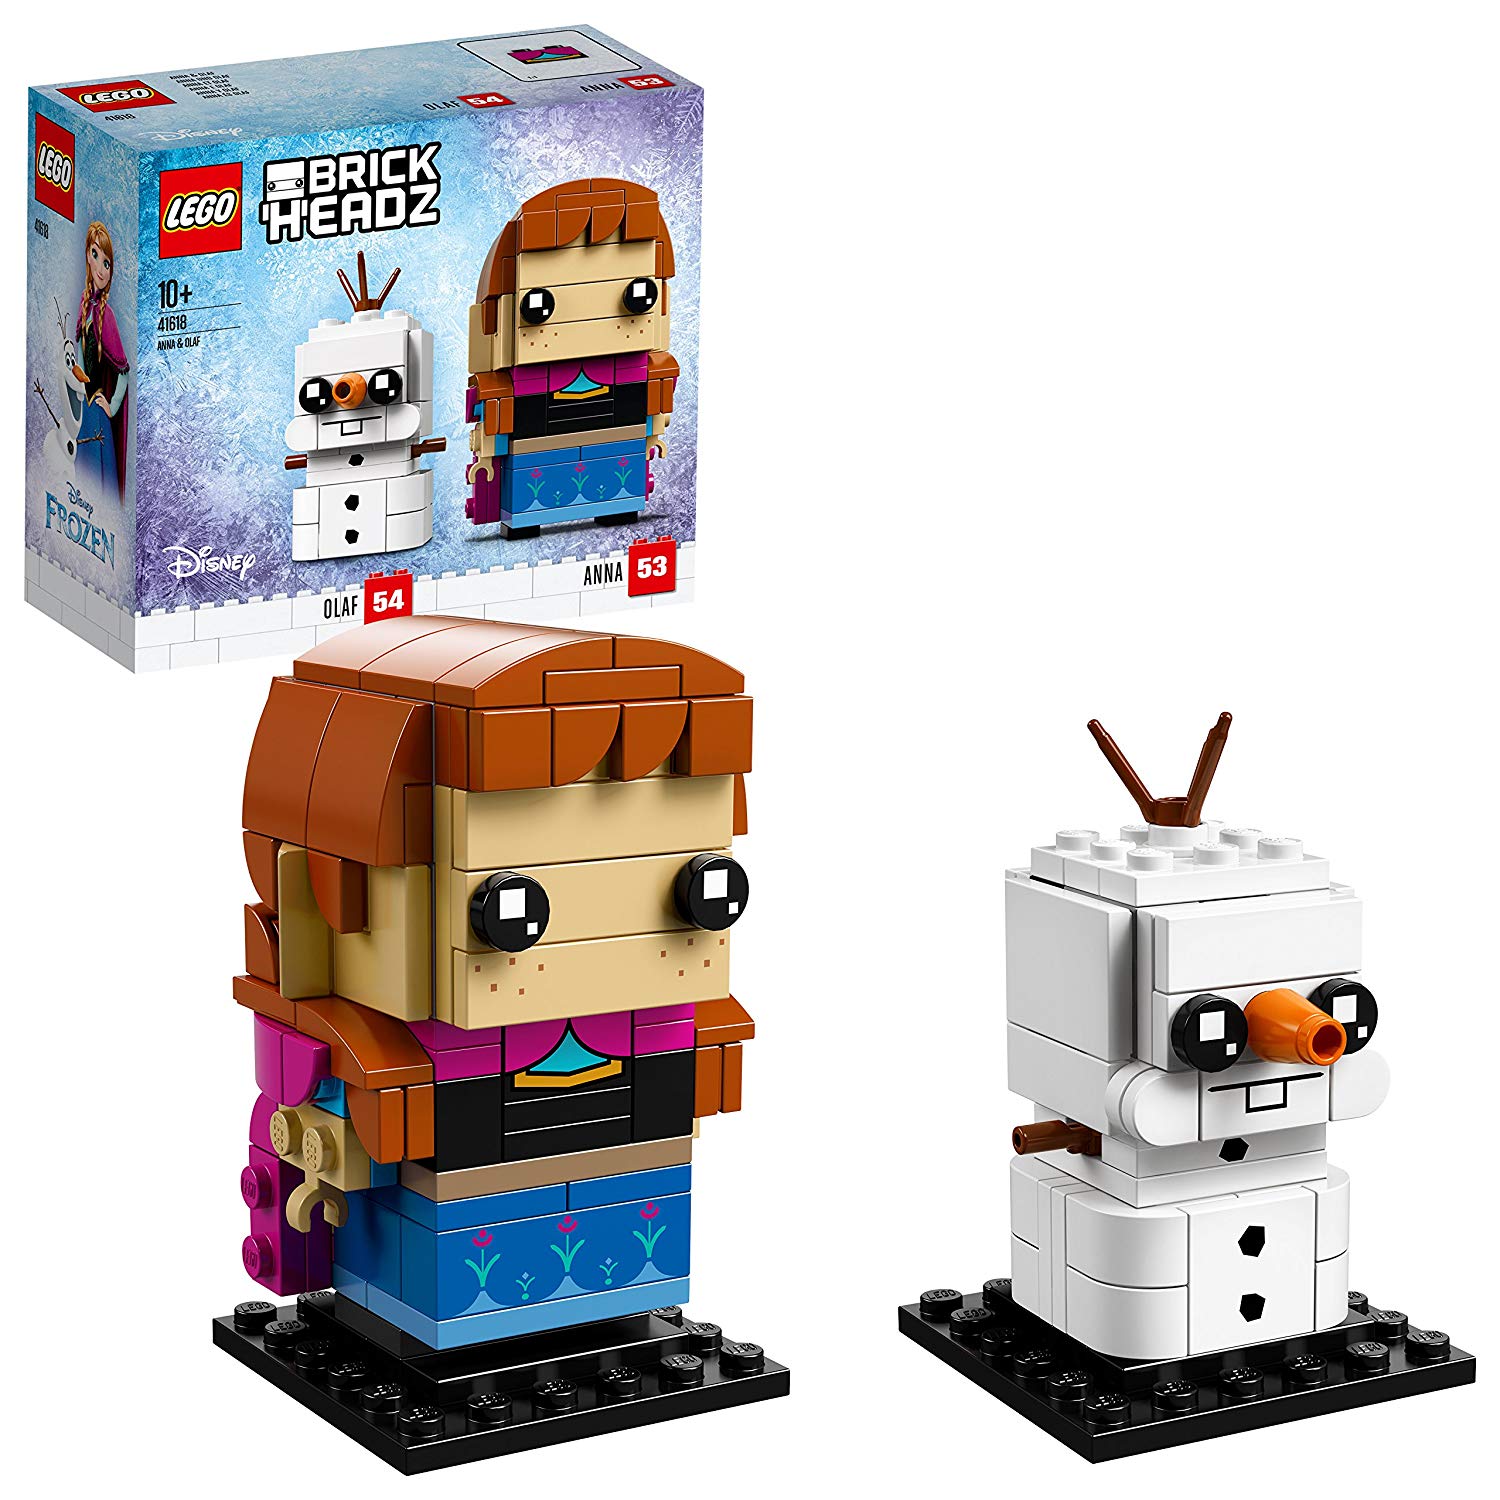 Lego Brickheadz Disney Frozen Princess Anna And Olaf (41618)